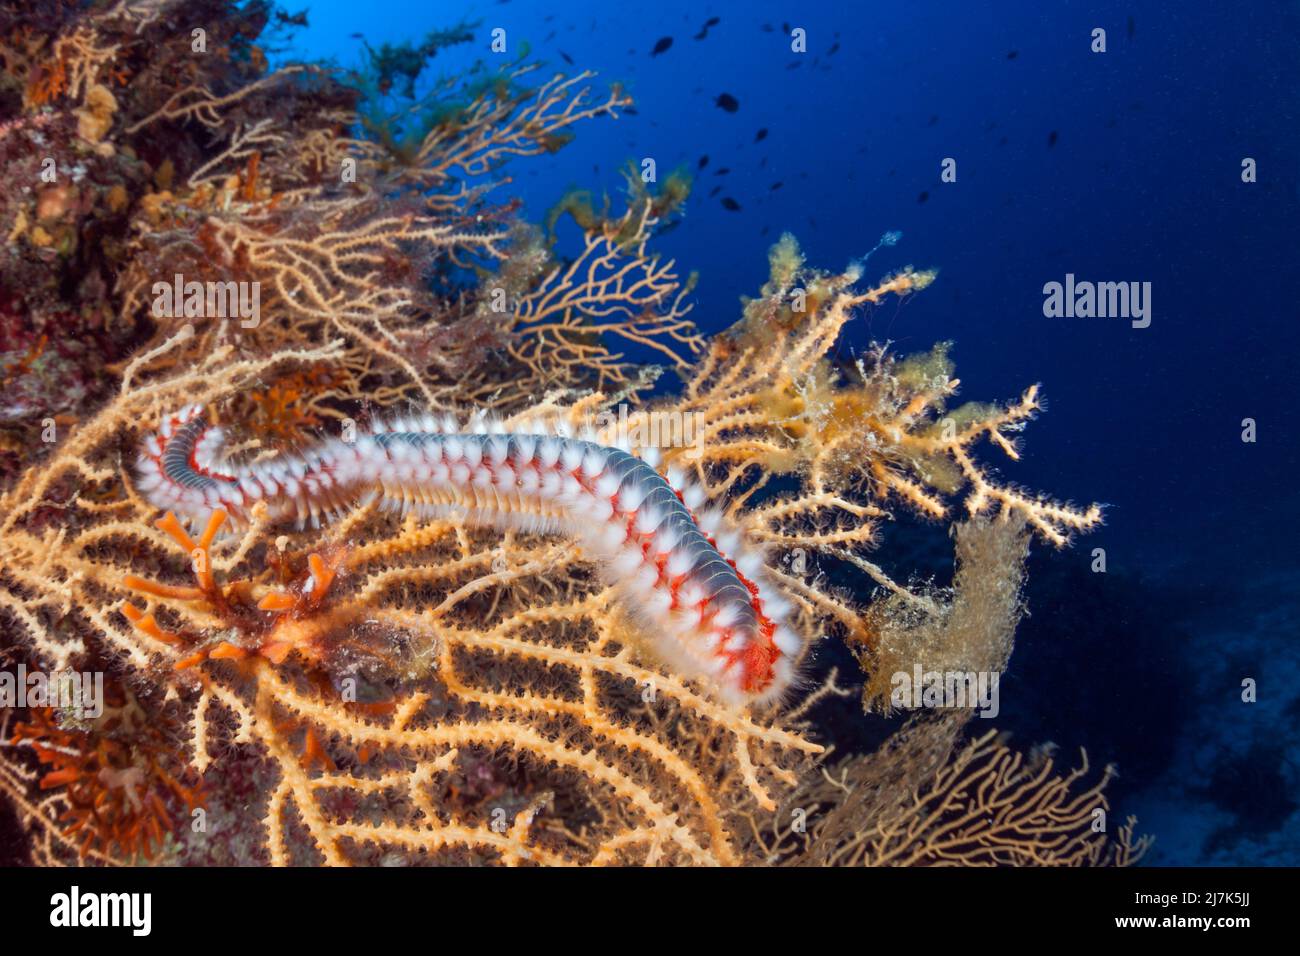 Fireworm, Hermodice carunculata, Vis Island, Mediterranean Sea, Croatia Stock Photo